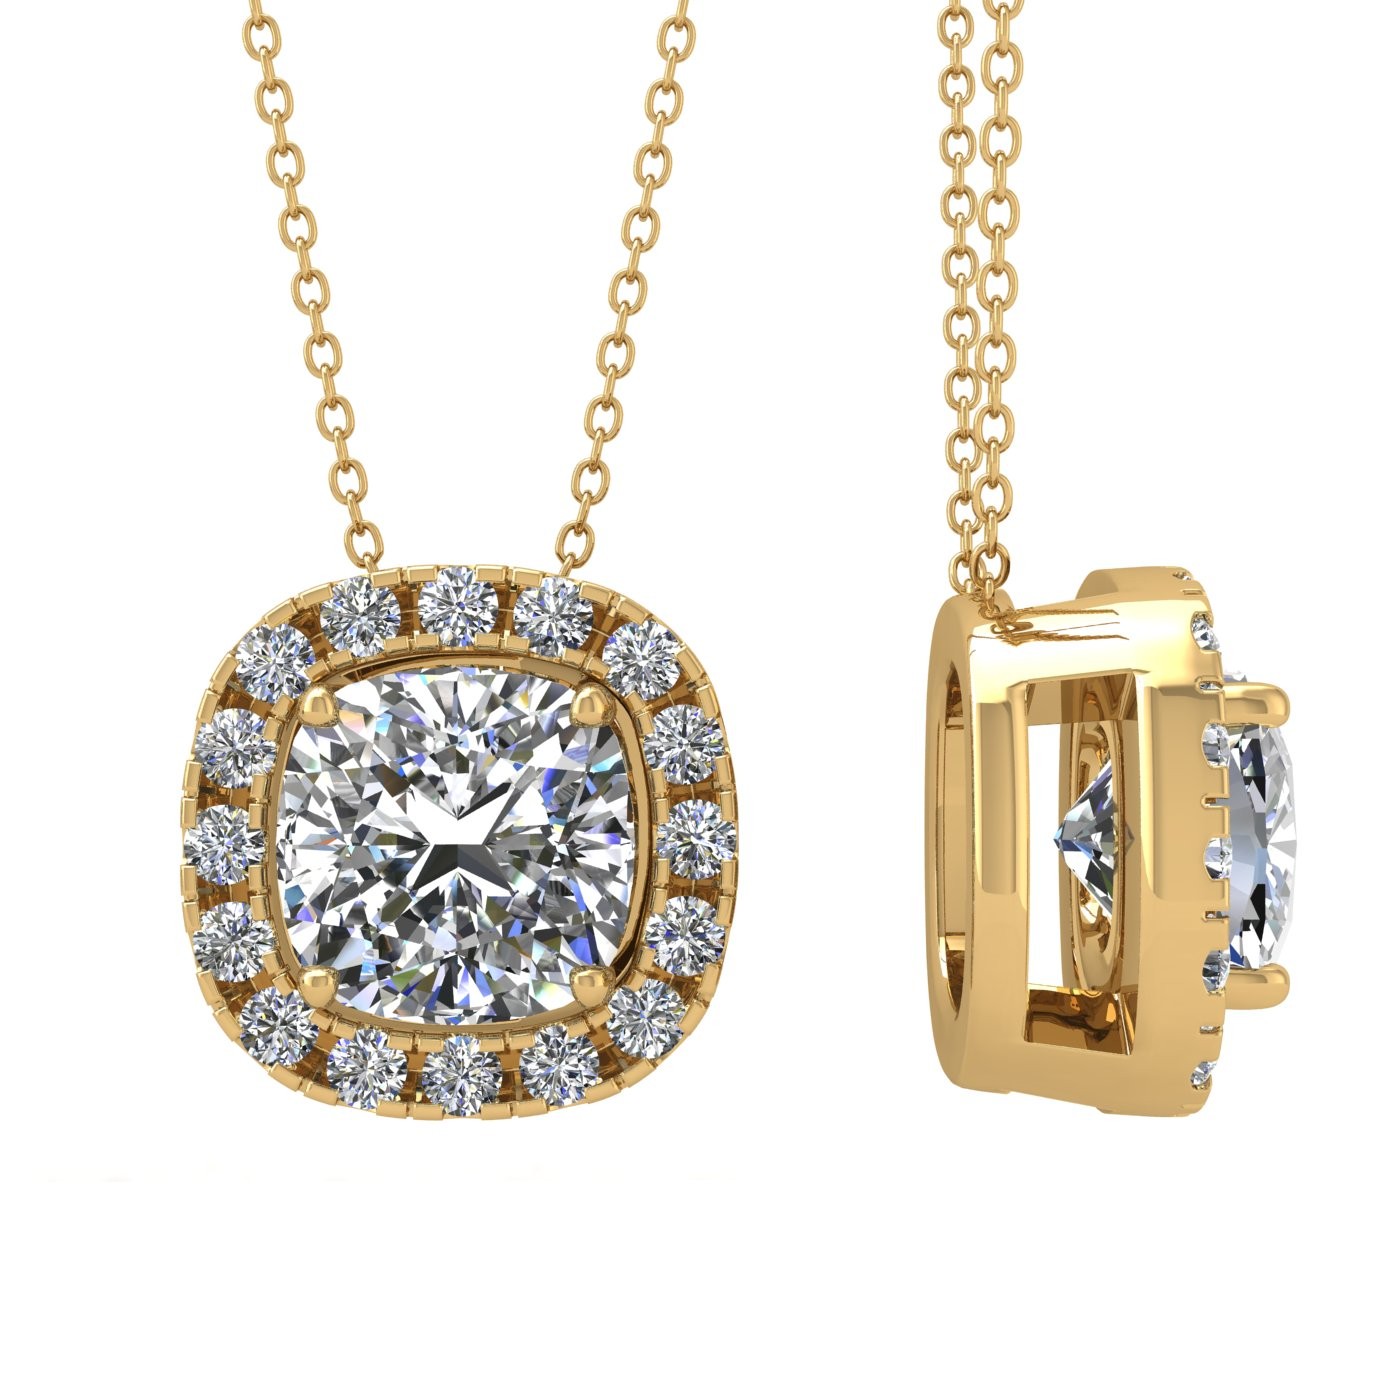 18k yellow gold  1,5 ct 4 prongs cushion shape diamond pendant with diamond pavÉ set halo Photos & images